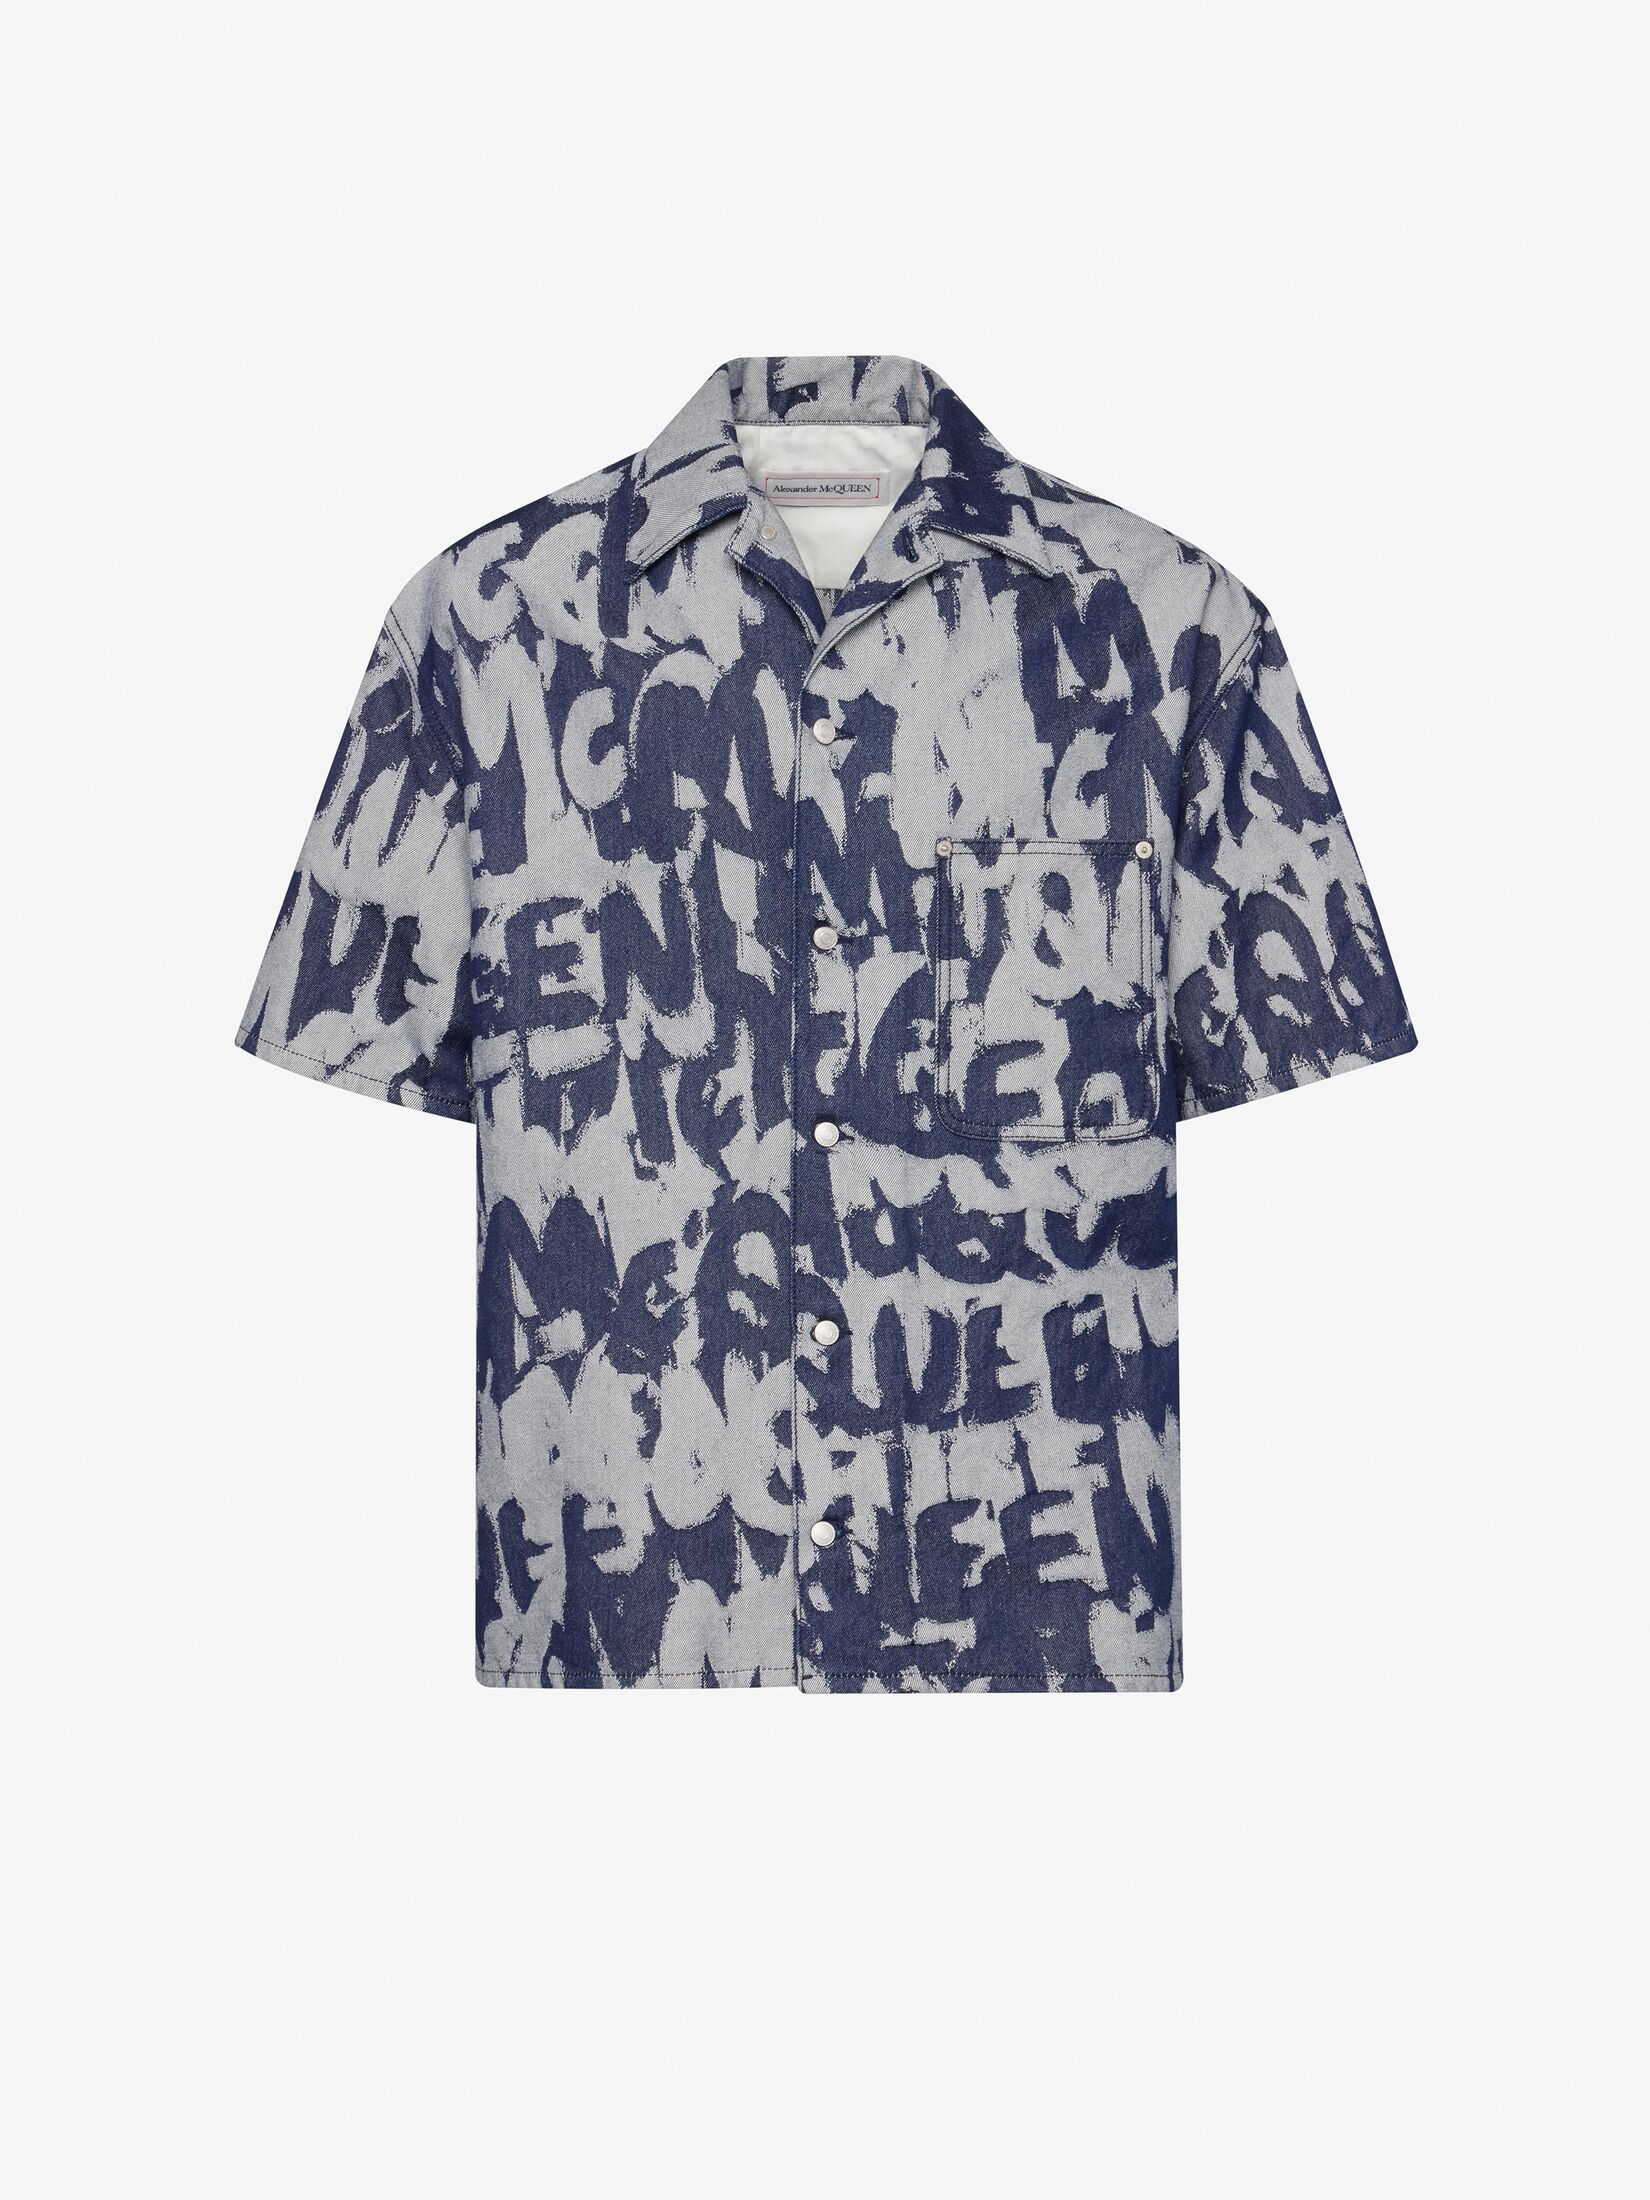 McQueen Graffiti Hawaiian Denim Shirt